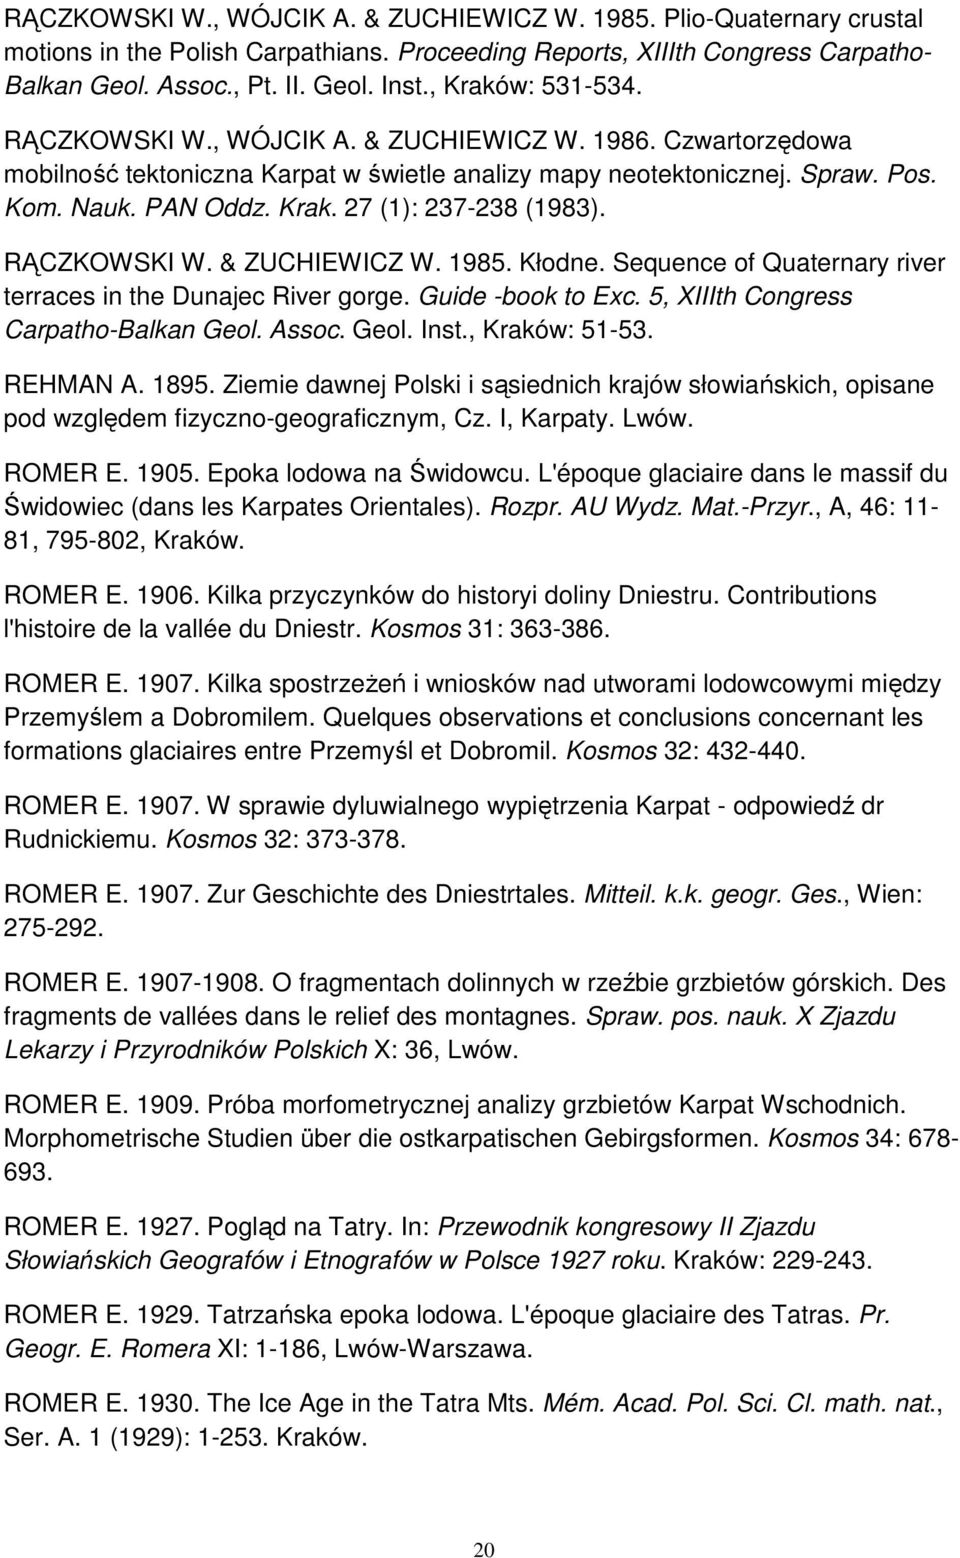 RĄCZKOWSKI W. & ZUCHIEWICZ W. 1985. Kłodne. Sequence of Quaternary river terraces in the Dunajec River gorge. Guide -book to Exc. 5, XIIIth Congress Carpatho-Balkan Geol. Assoc. Geol. Inst.